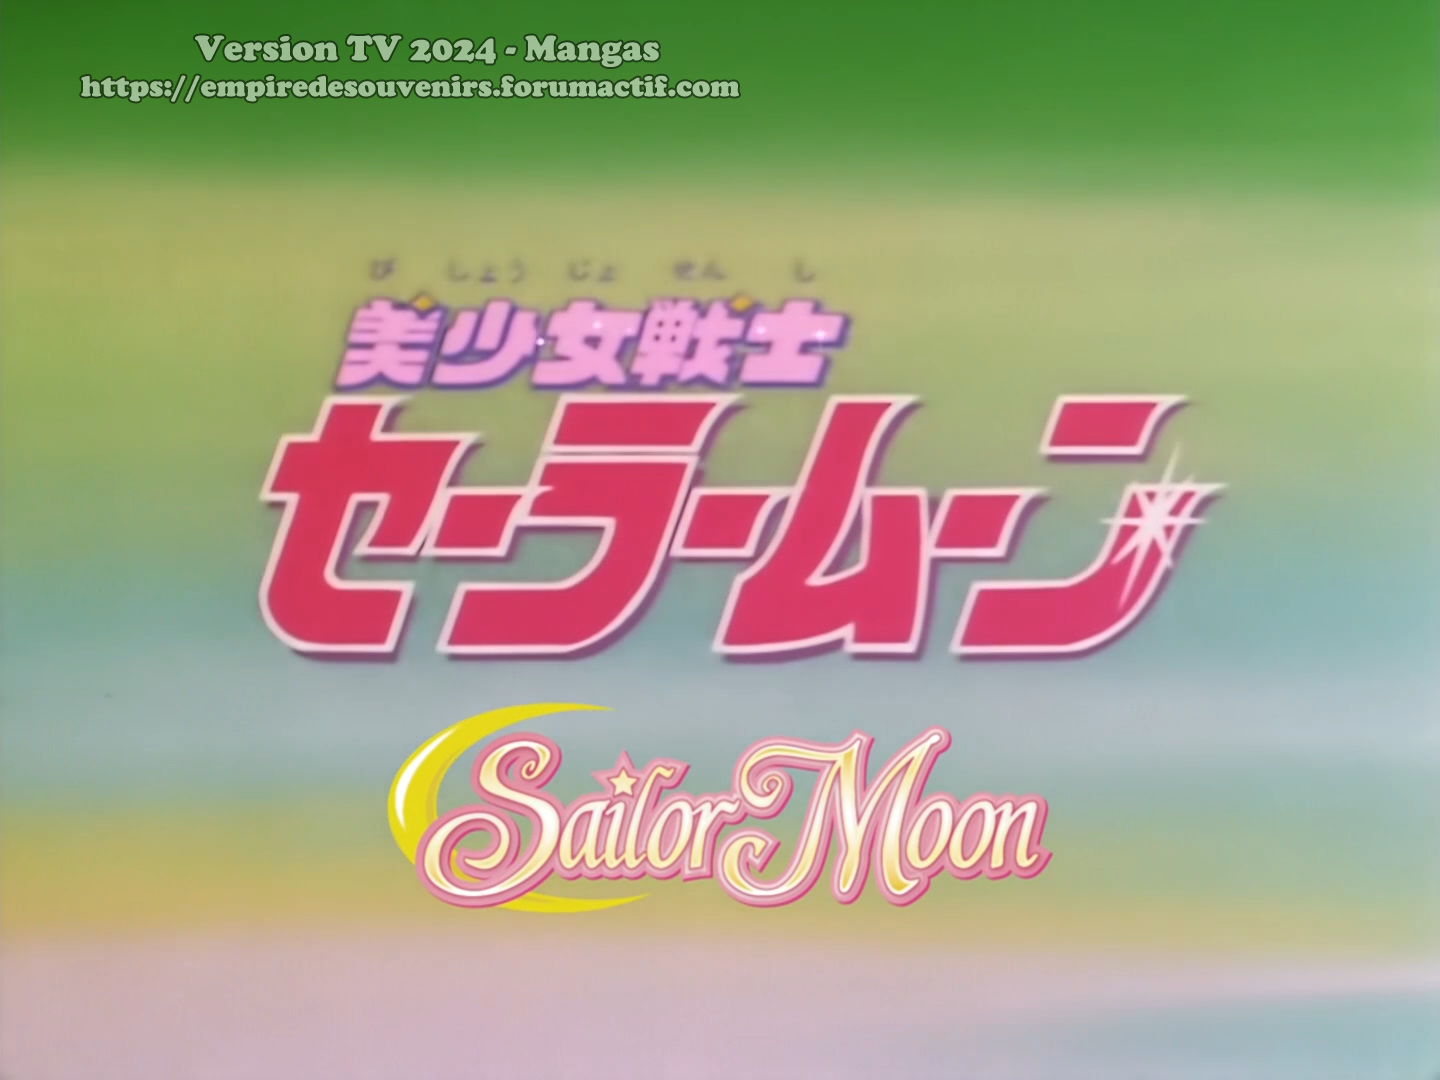 Sailor Moon sur Mangas ! V0nl